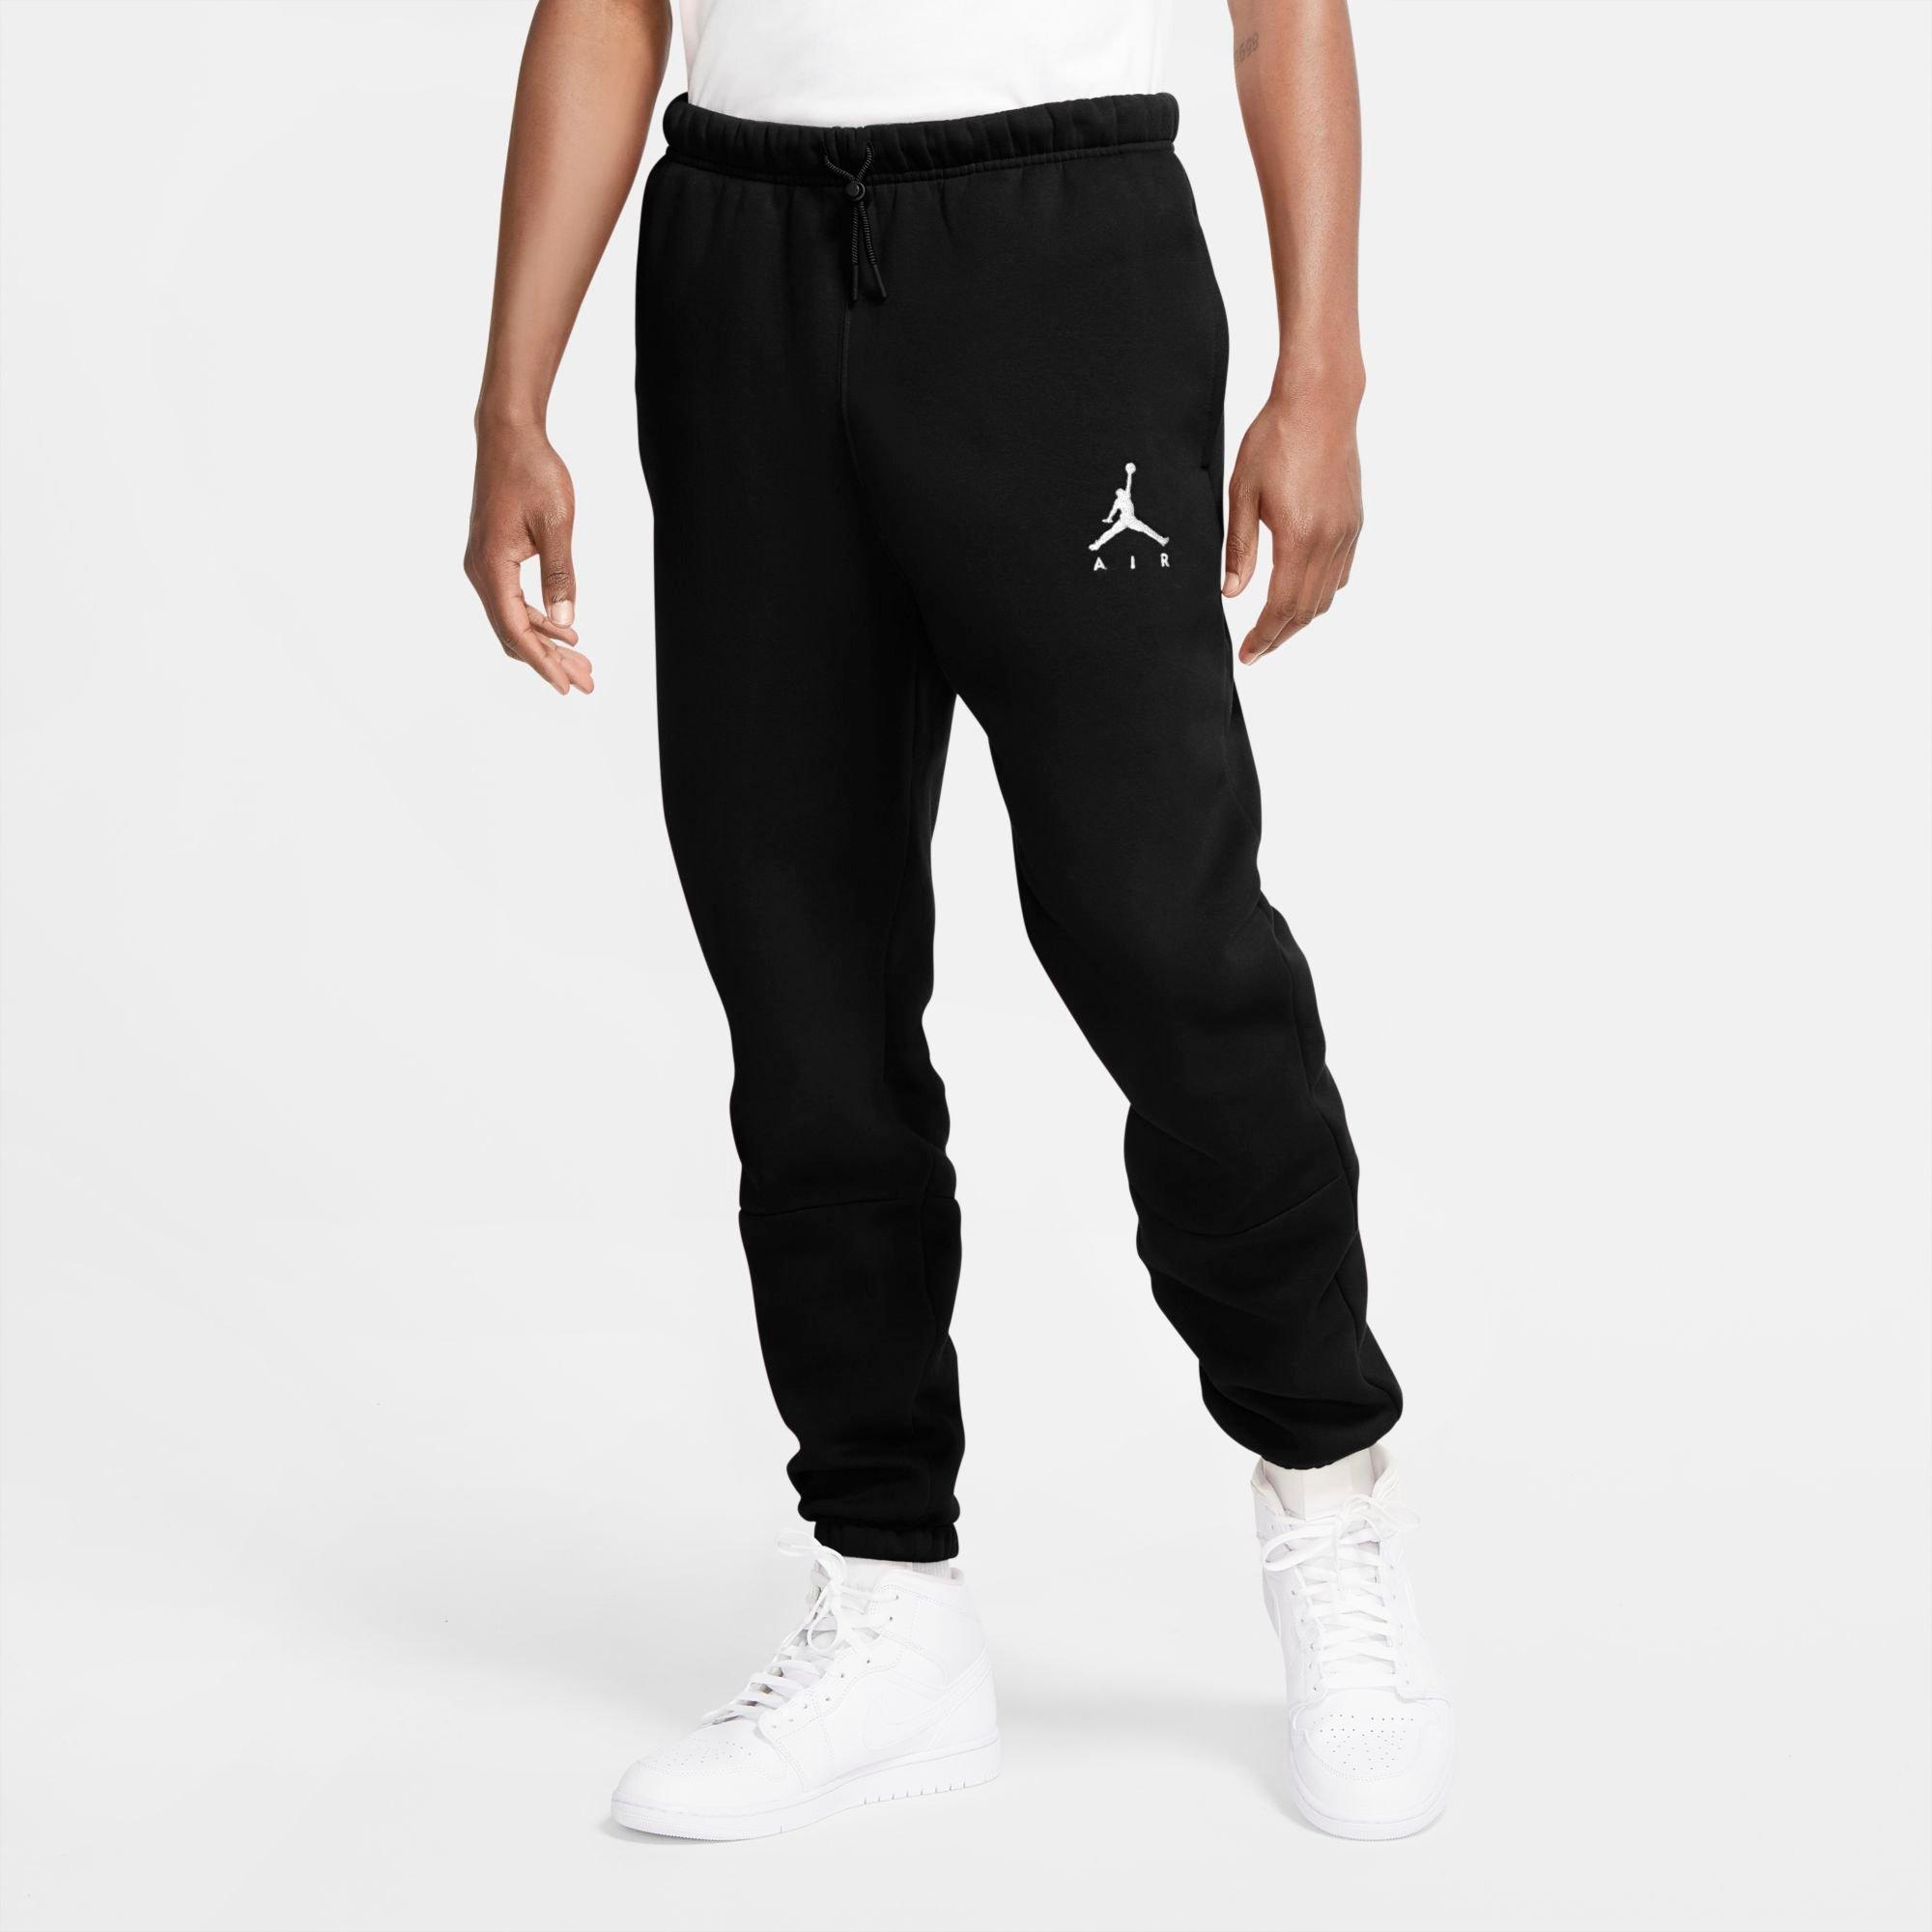 black and white jordan pants